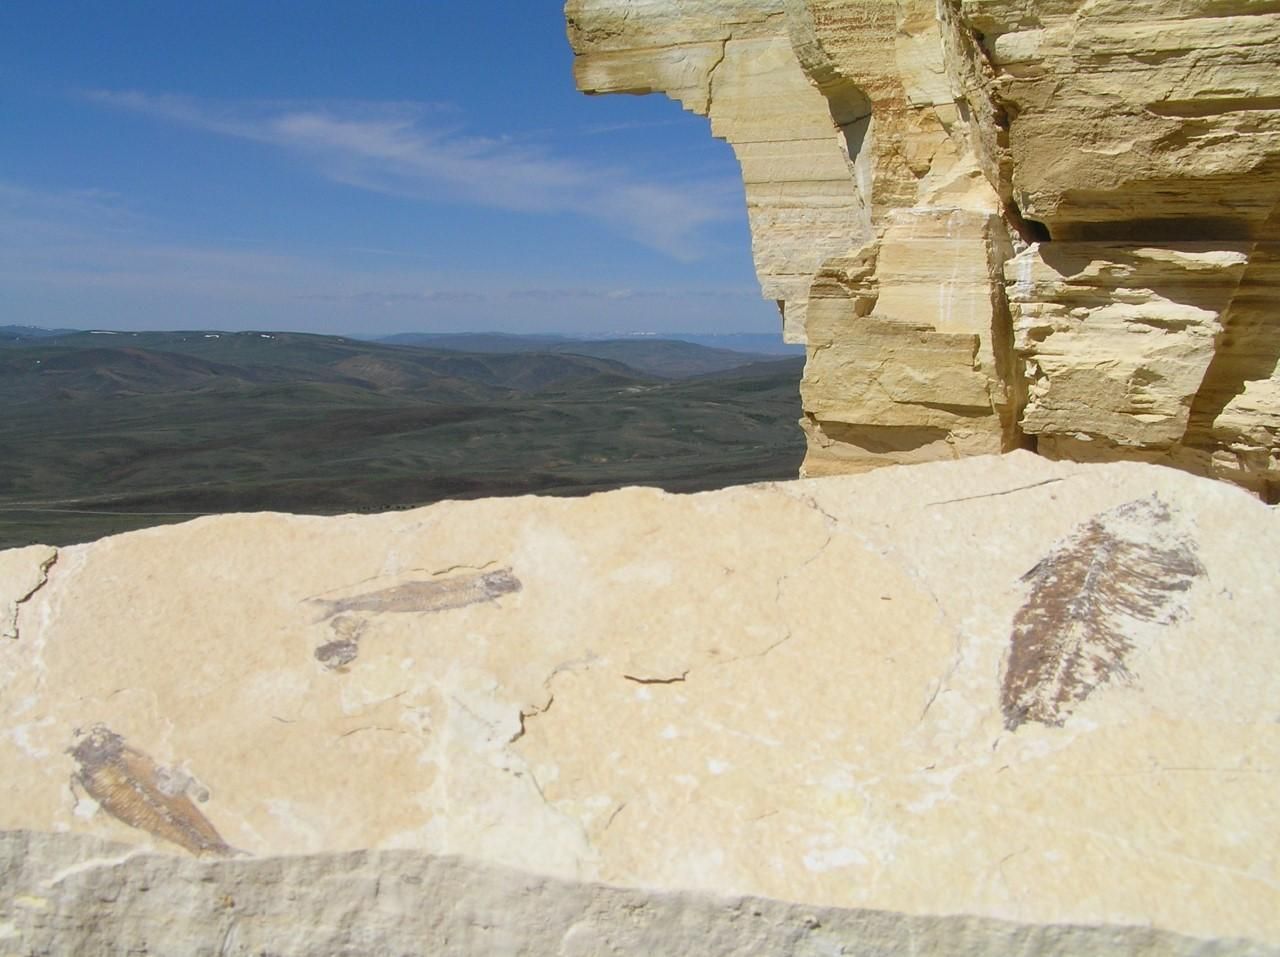 Knightia eocaena, the most abundant vertebrate fossil in the world, lies exposed near cliff face.